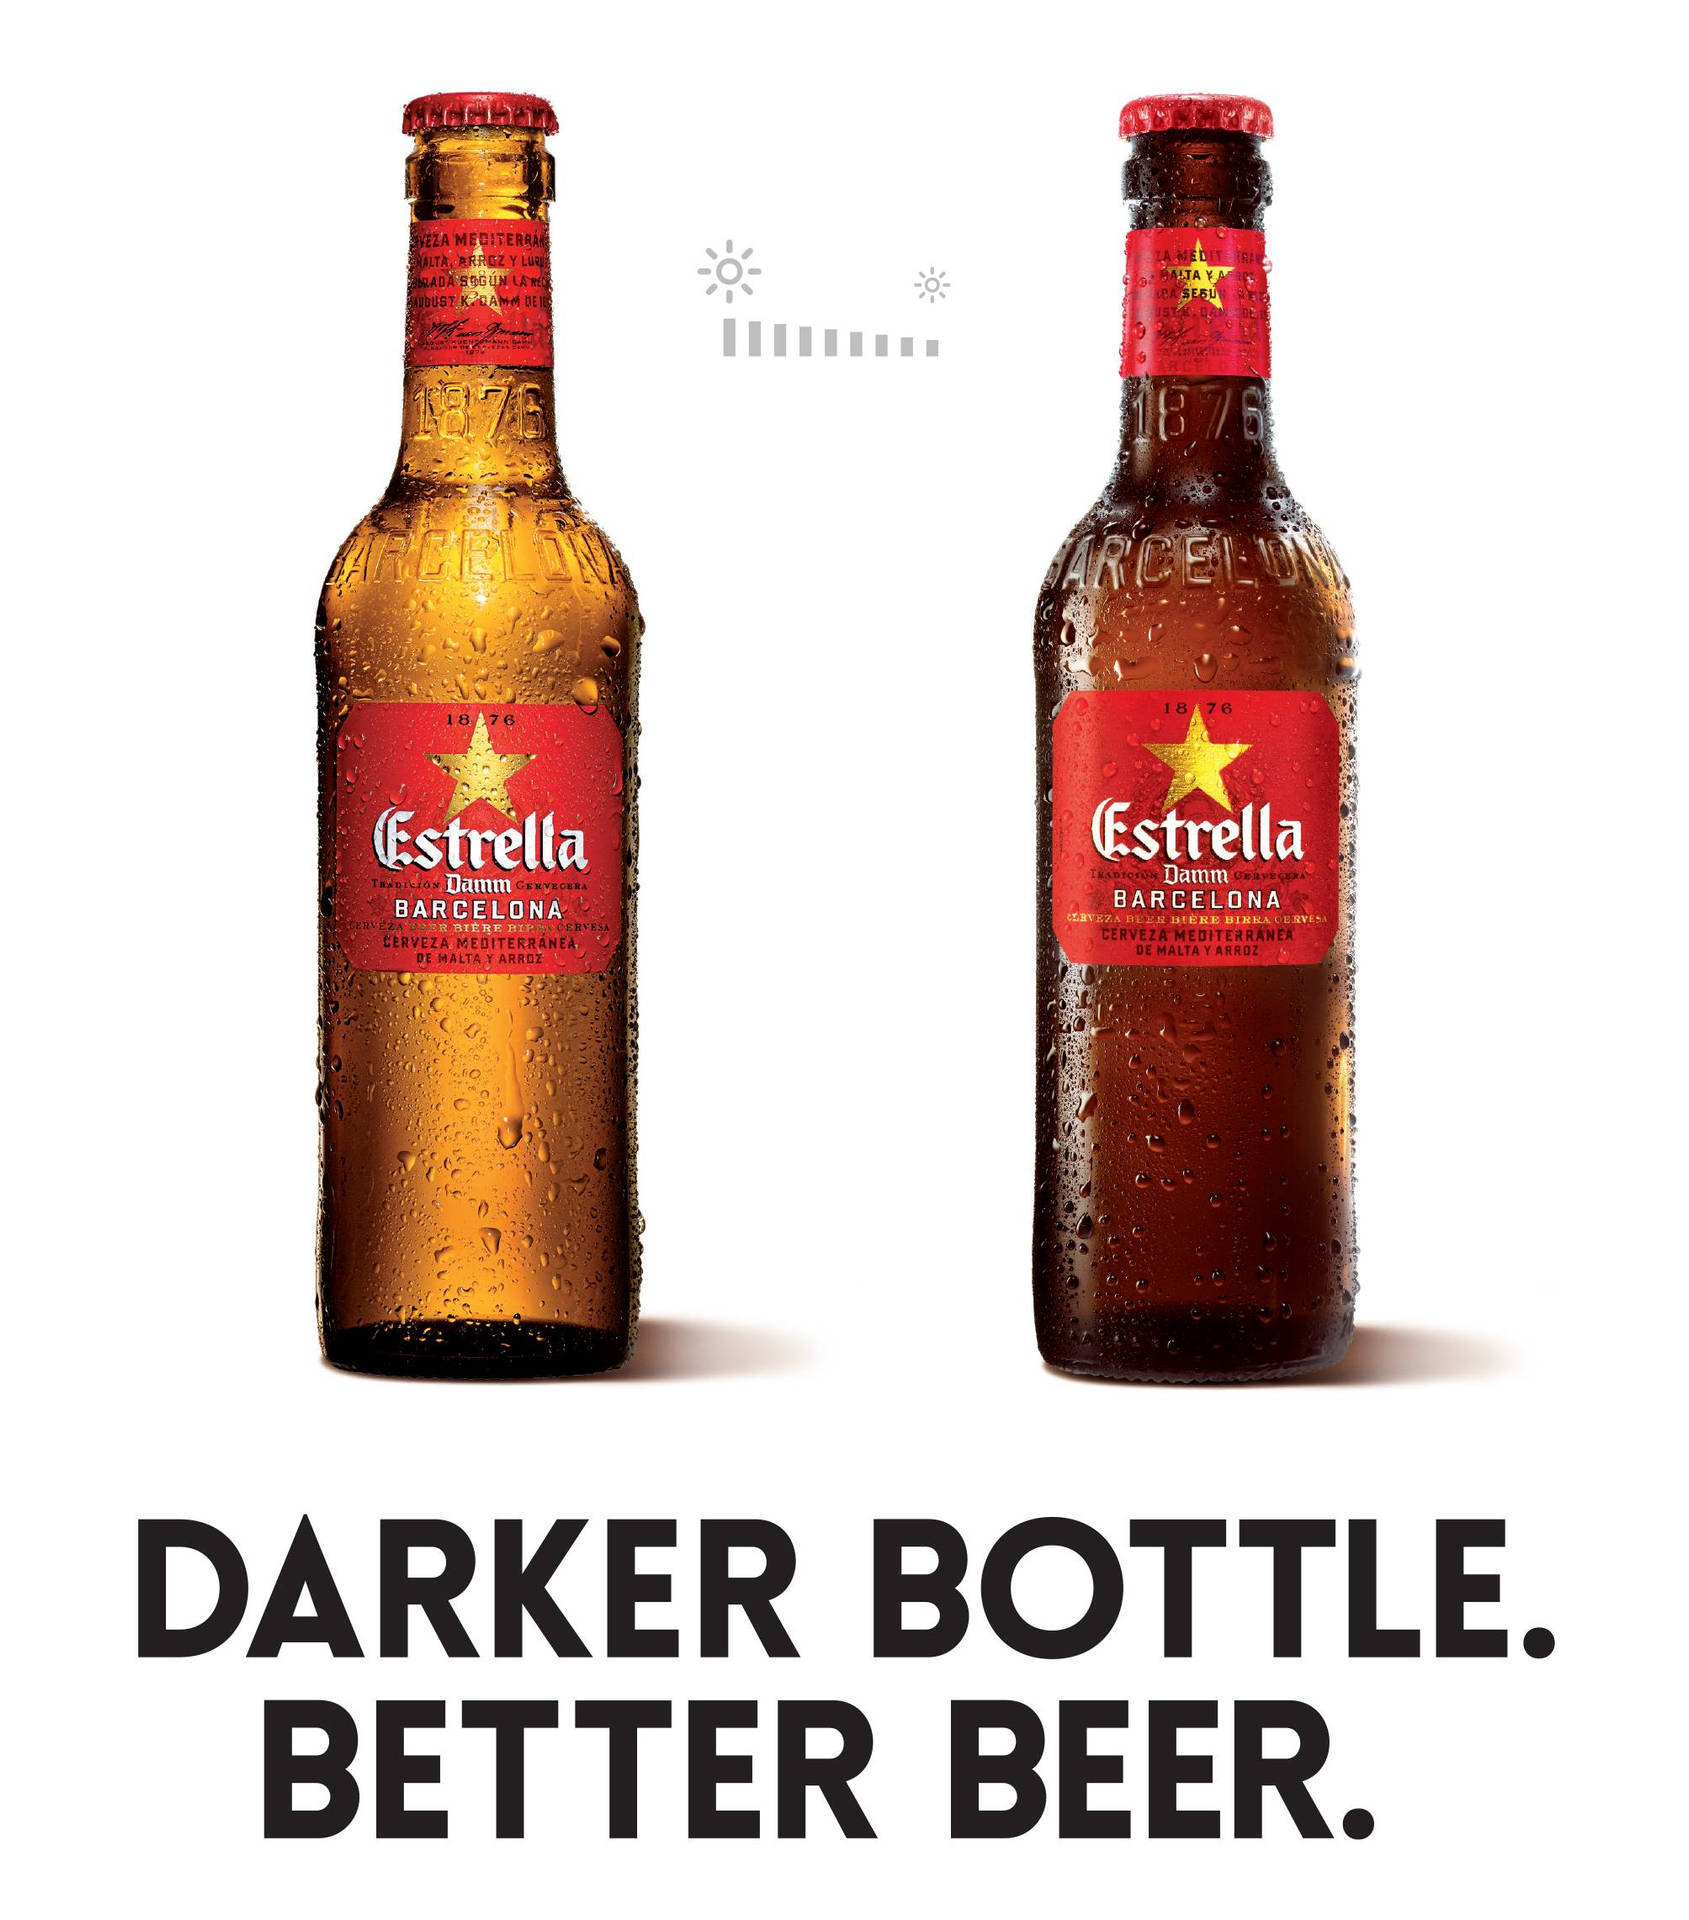 Estrella Damm Darker Bottle Better Beer Campaign Wallpaper